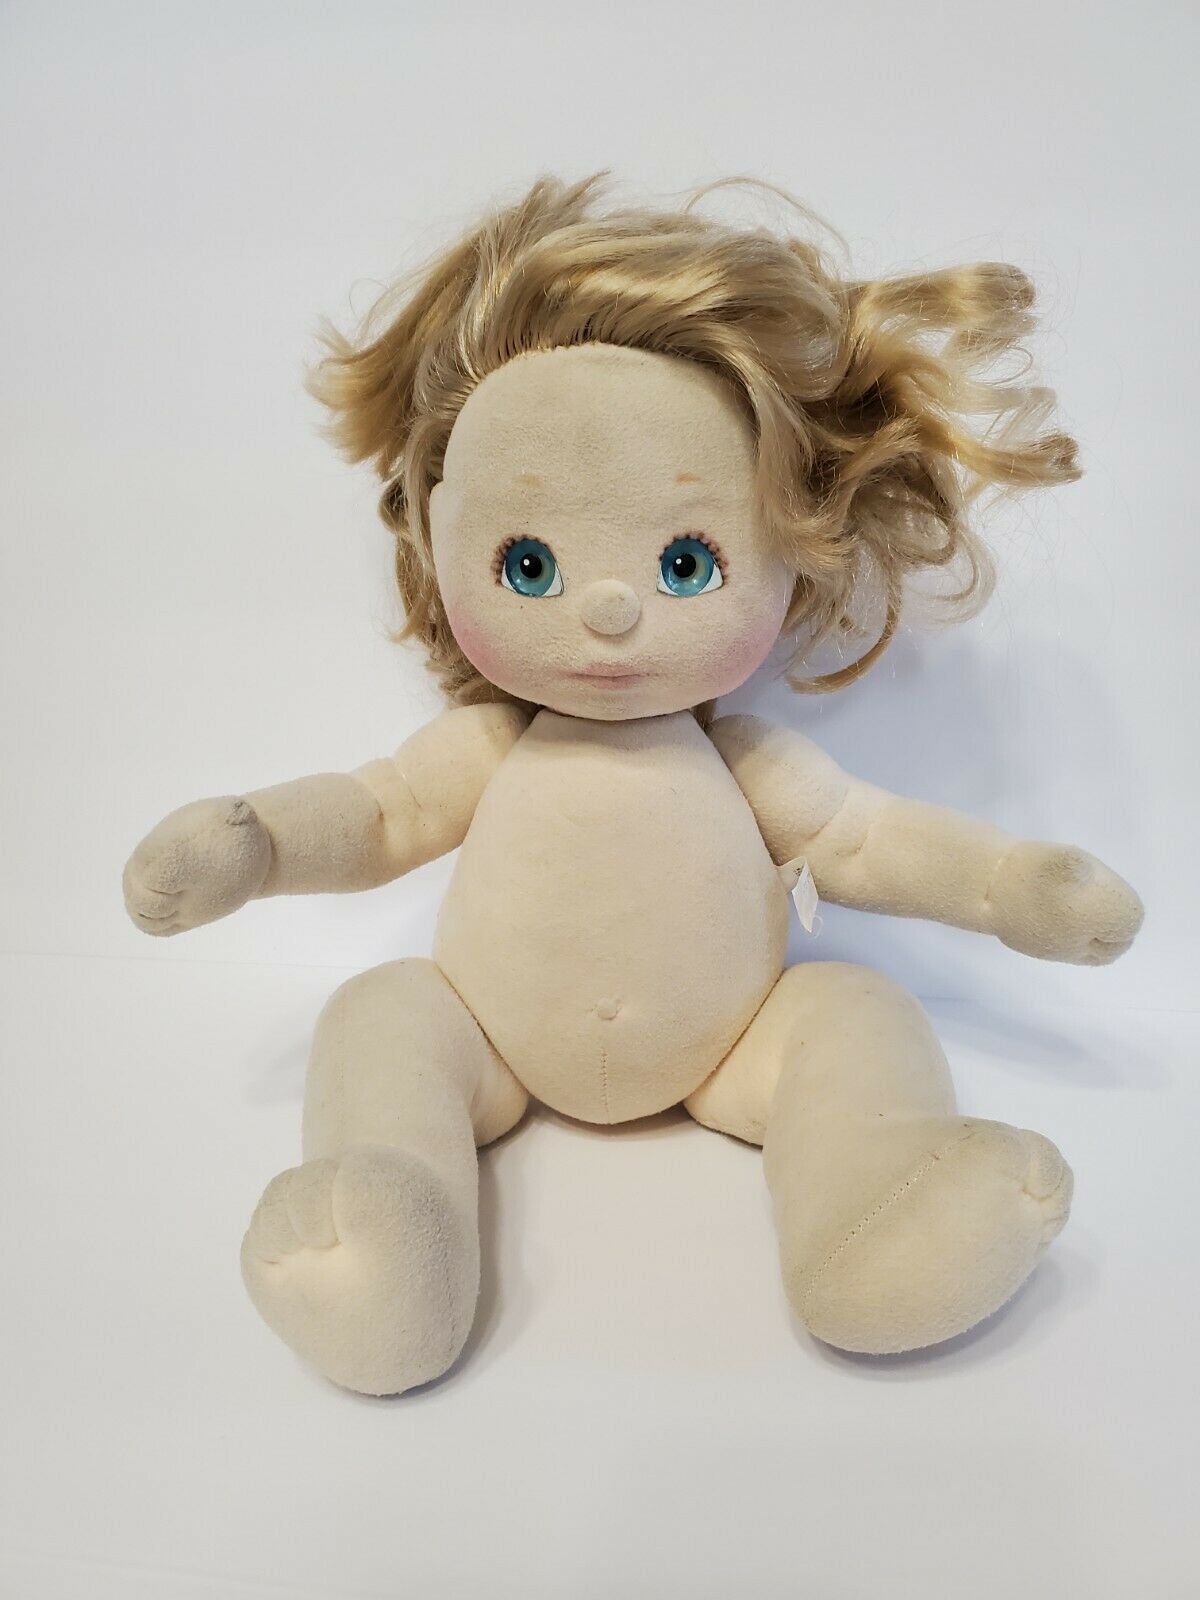 Vintage Mattel Tlc My Child Doll Strawberry Blonde? Or Blonde Green/ Blue Eyes